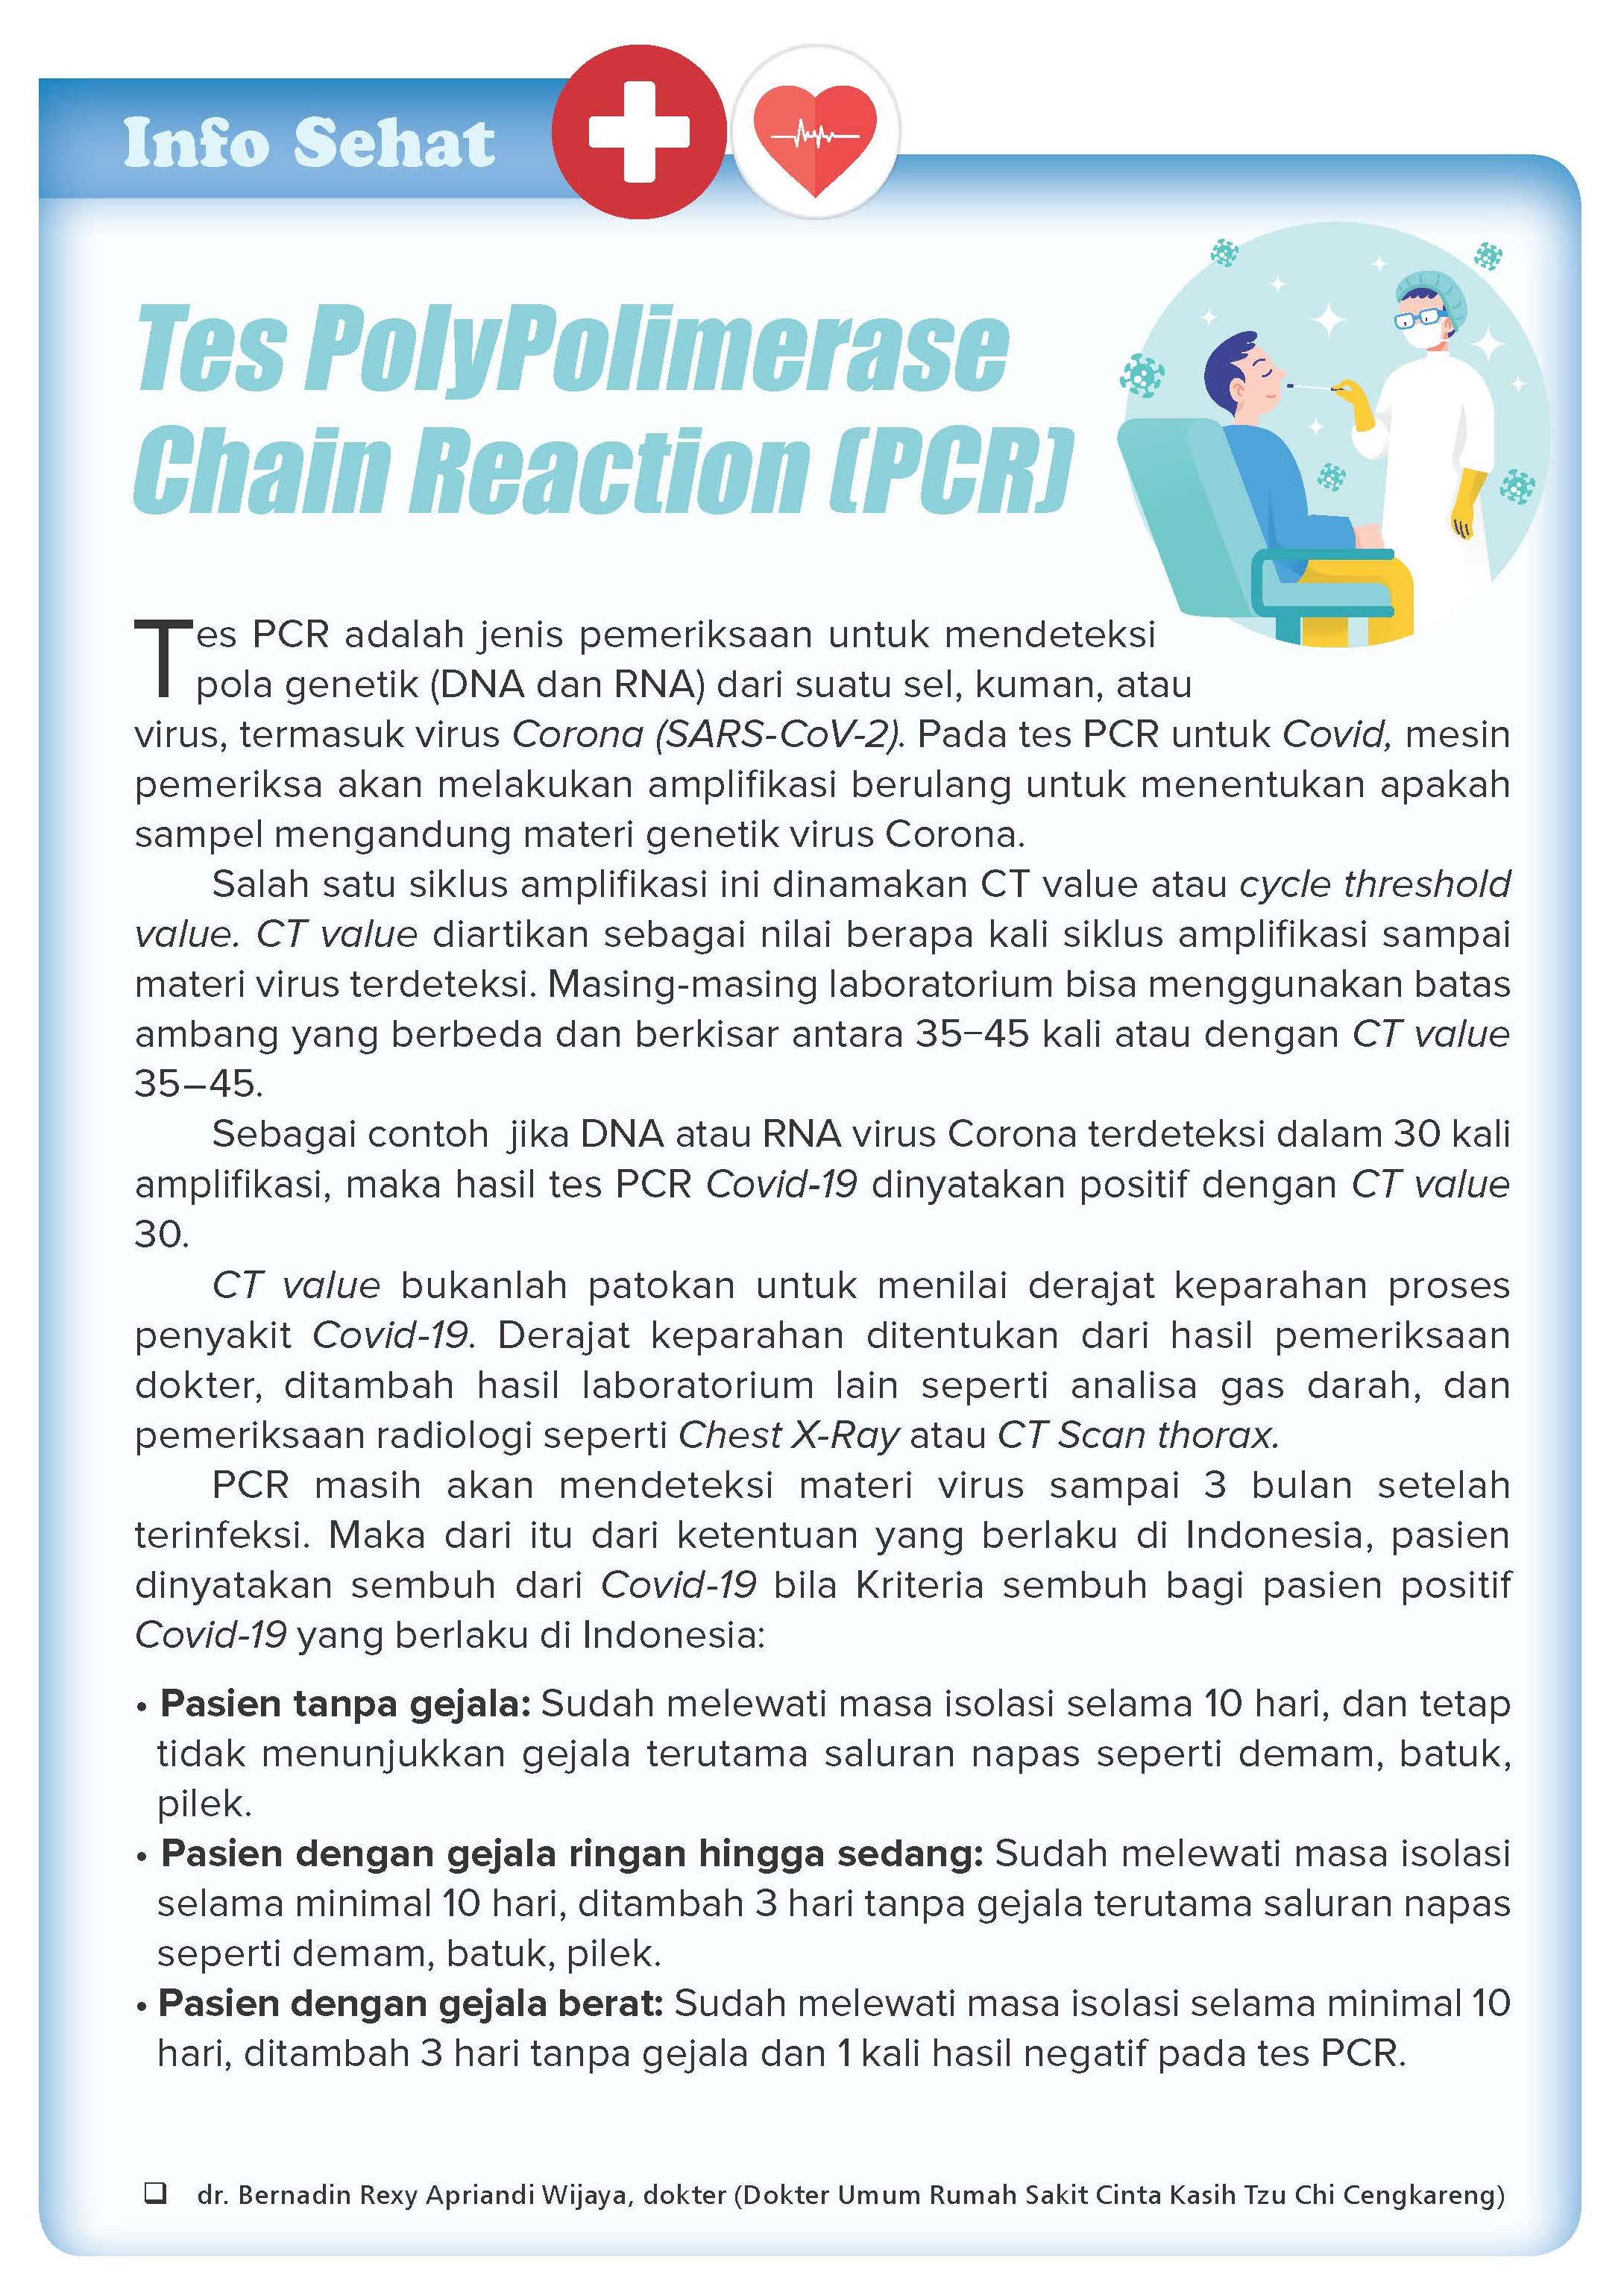 Tes PolyPolimerase Chain Reaction (PCR)